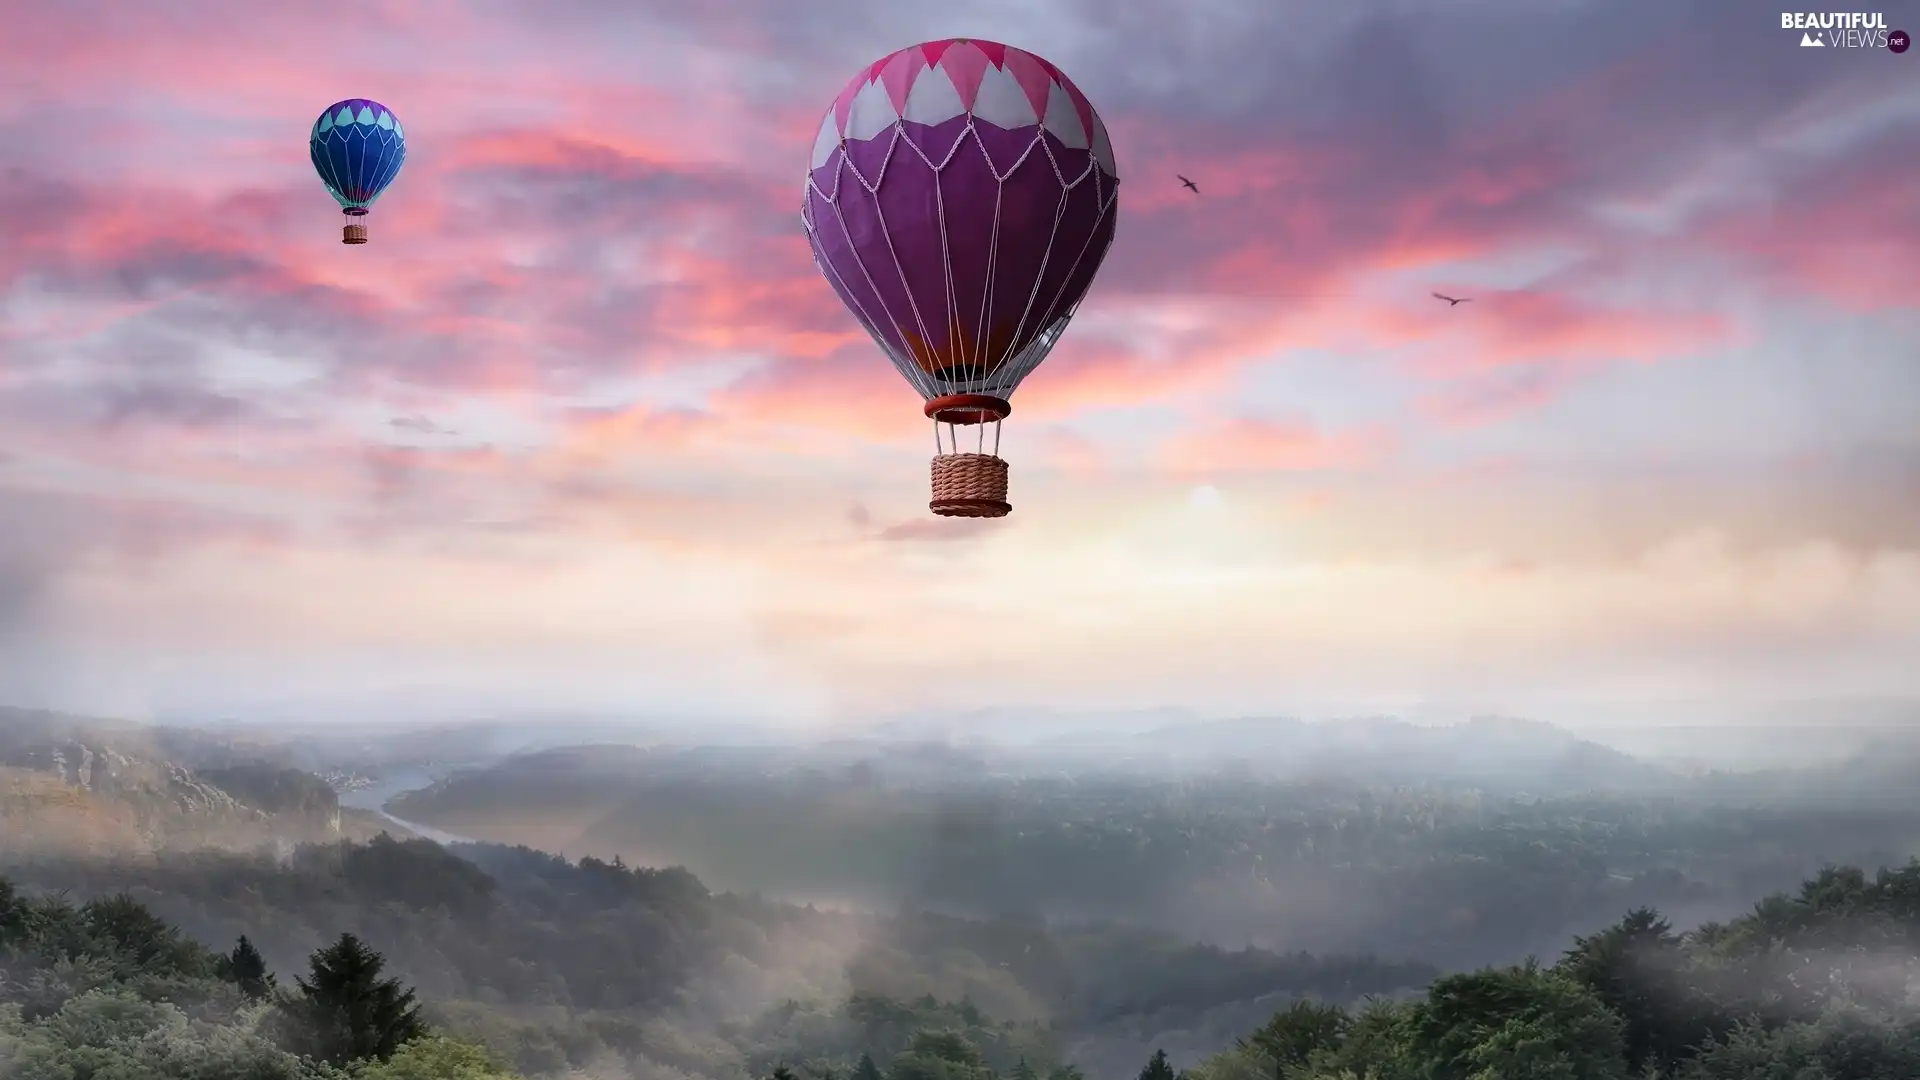 viewes, Mountains, Fog, trees, Balloons, VEGETATION, birds